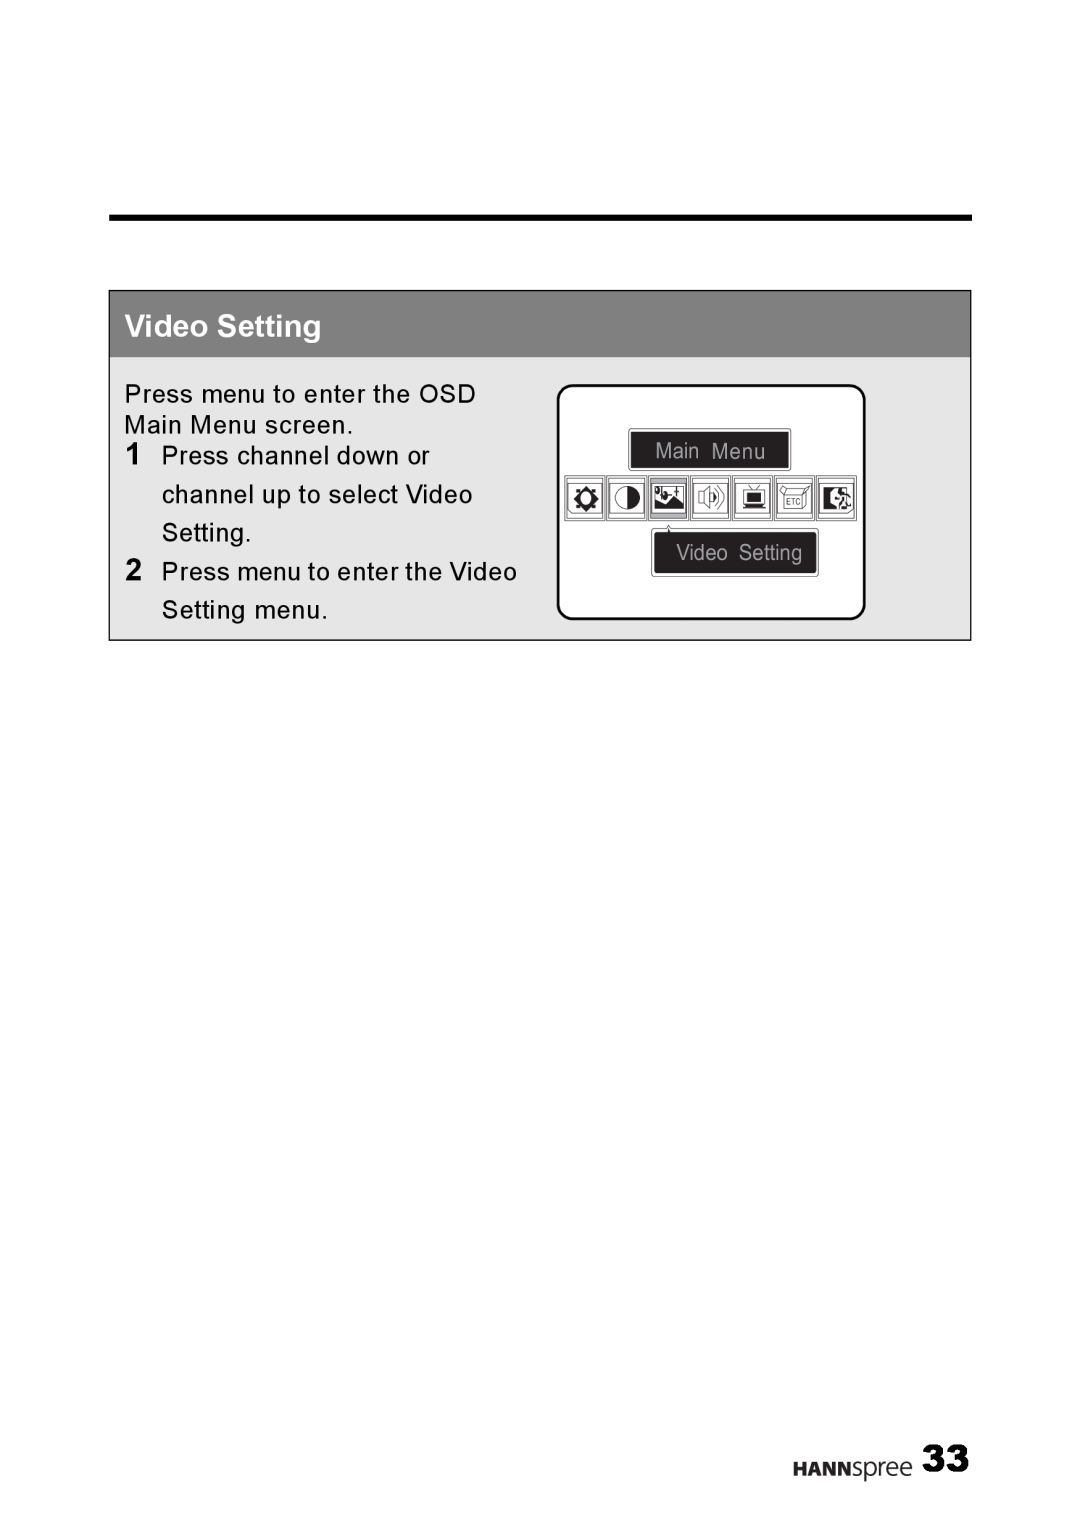 HANNspree LT09-10U1-000 user manual Video Setting, Press menu to enter the OSD Main Menu screen 